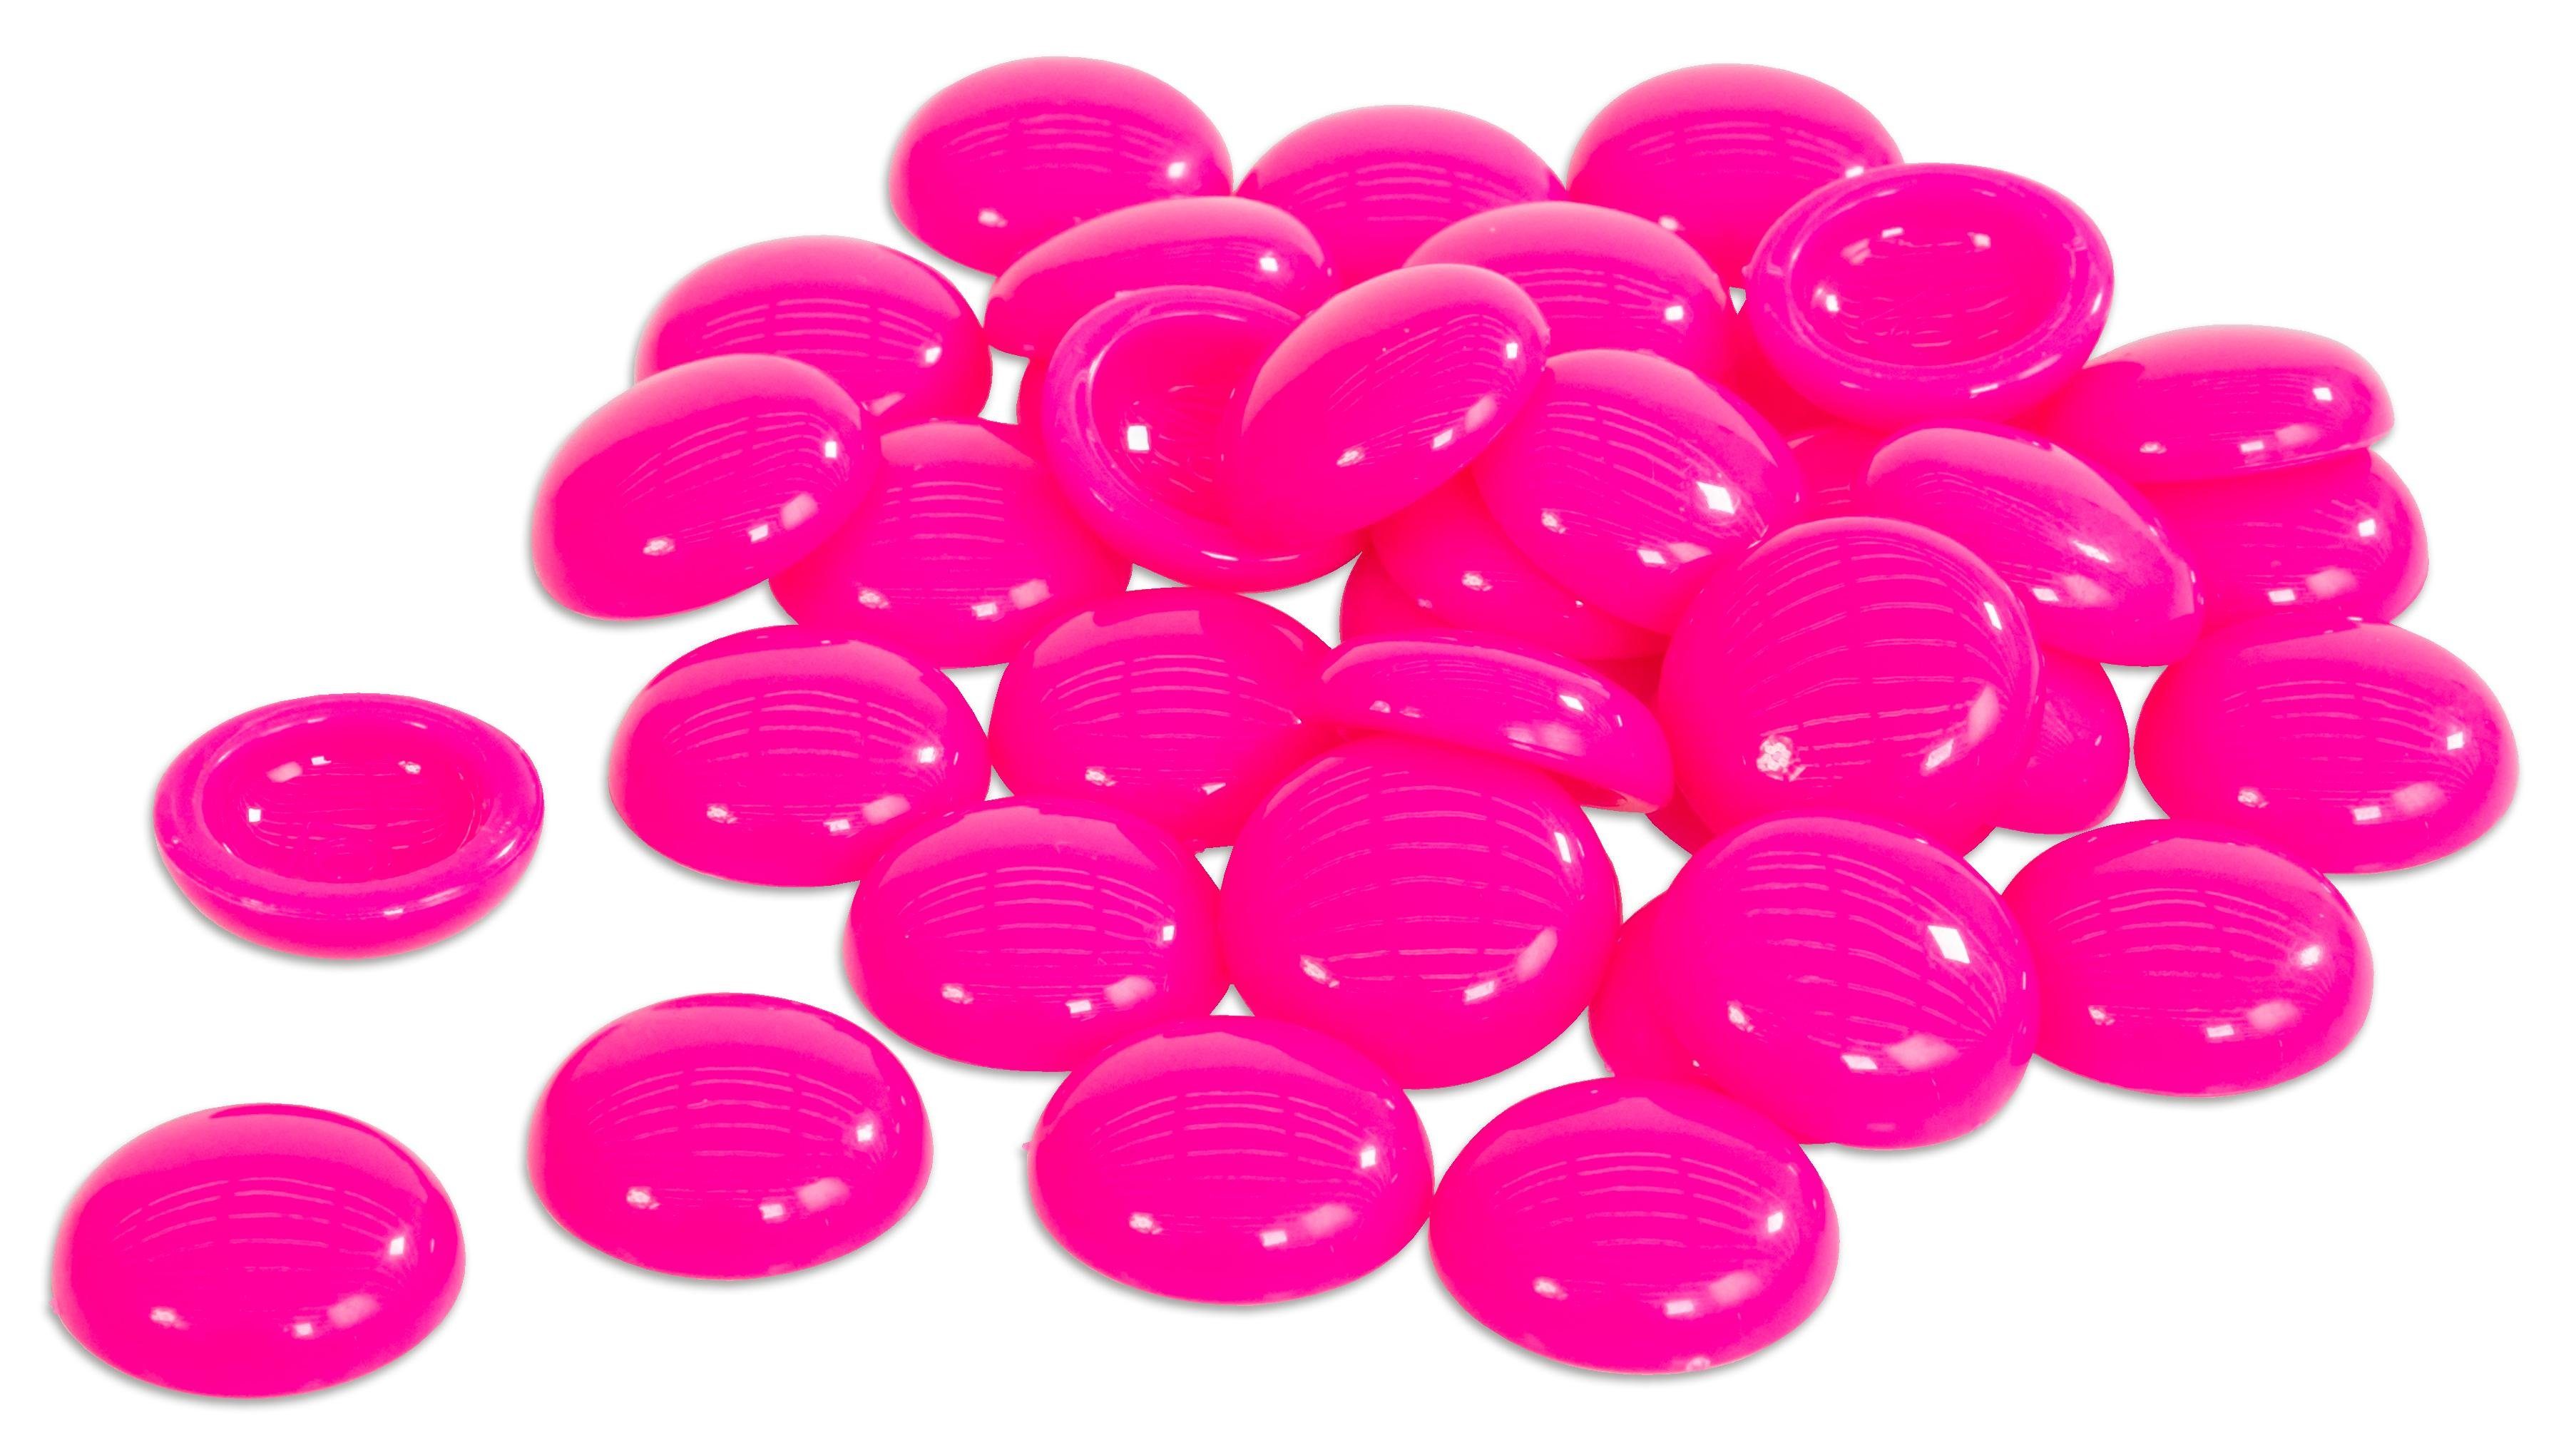 Betzold Lernspielzeug Muggelsteine Ø 20 mm 250 Stück Muggel-Steine bunt pink